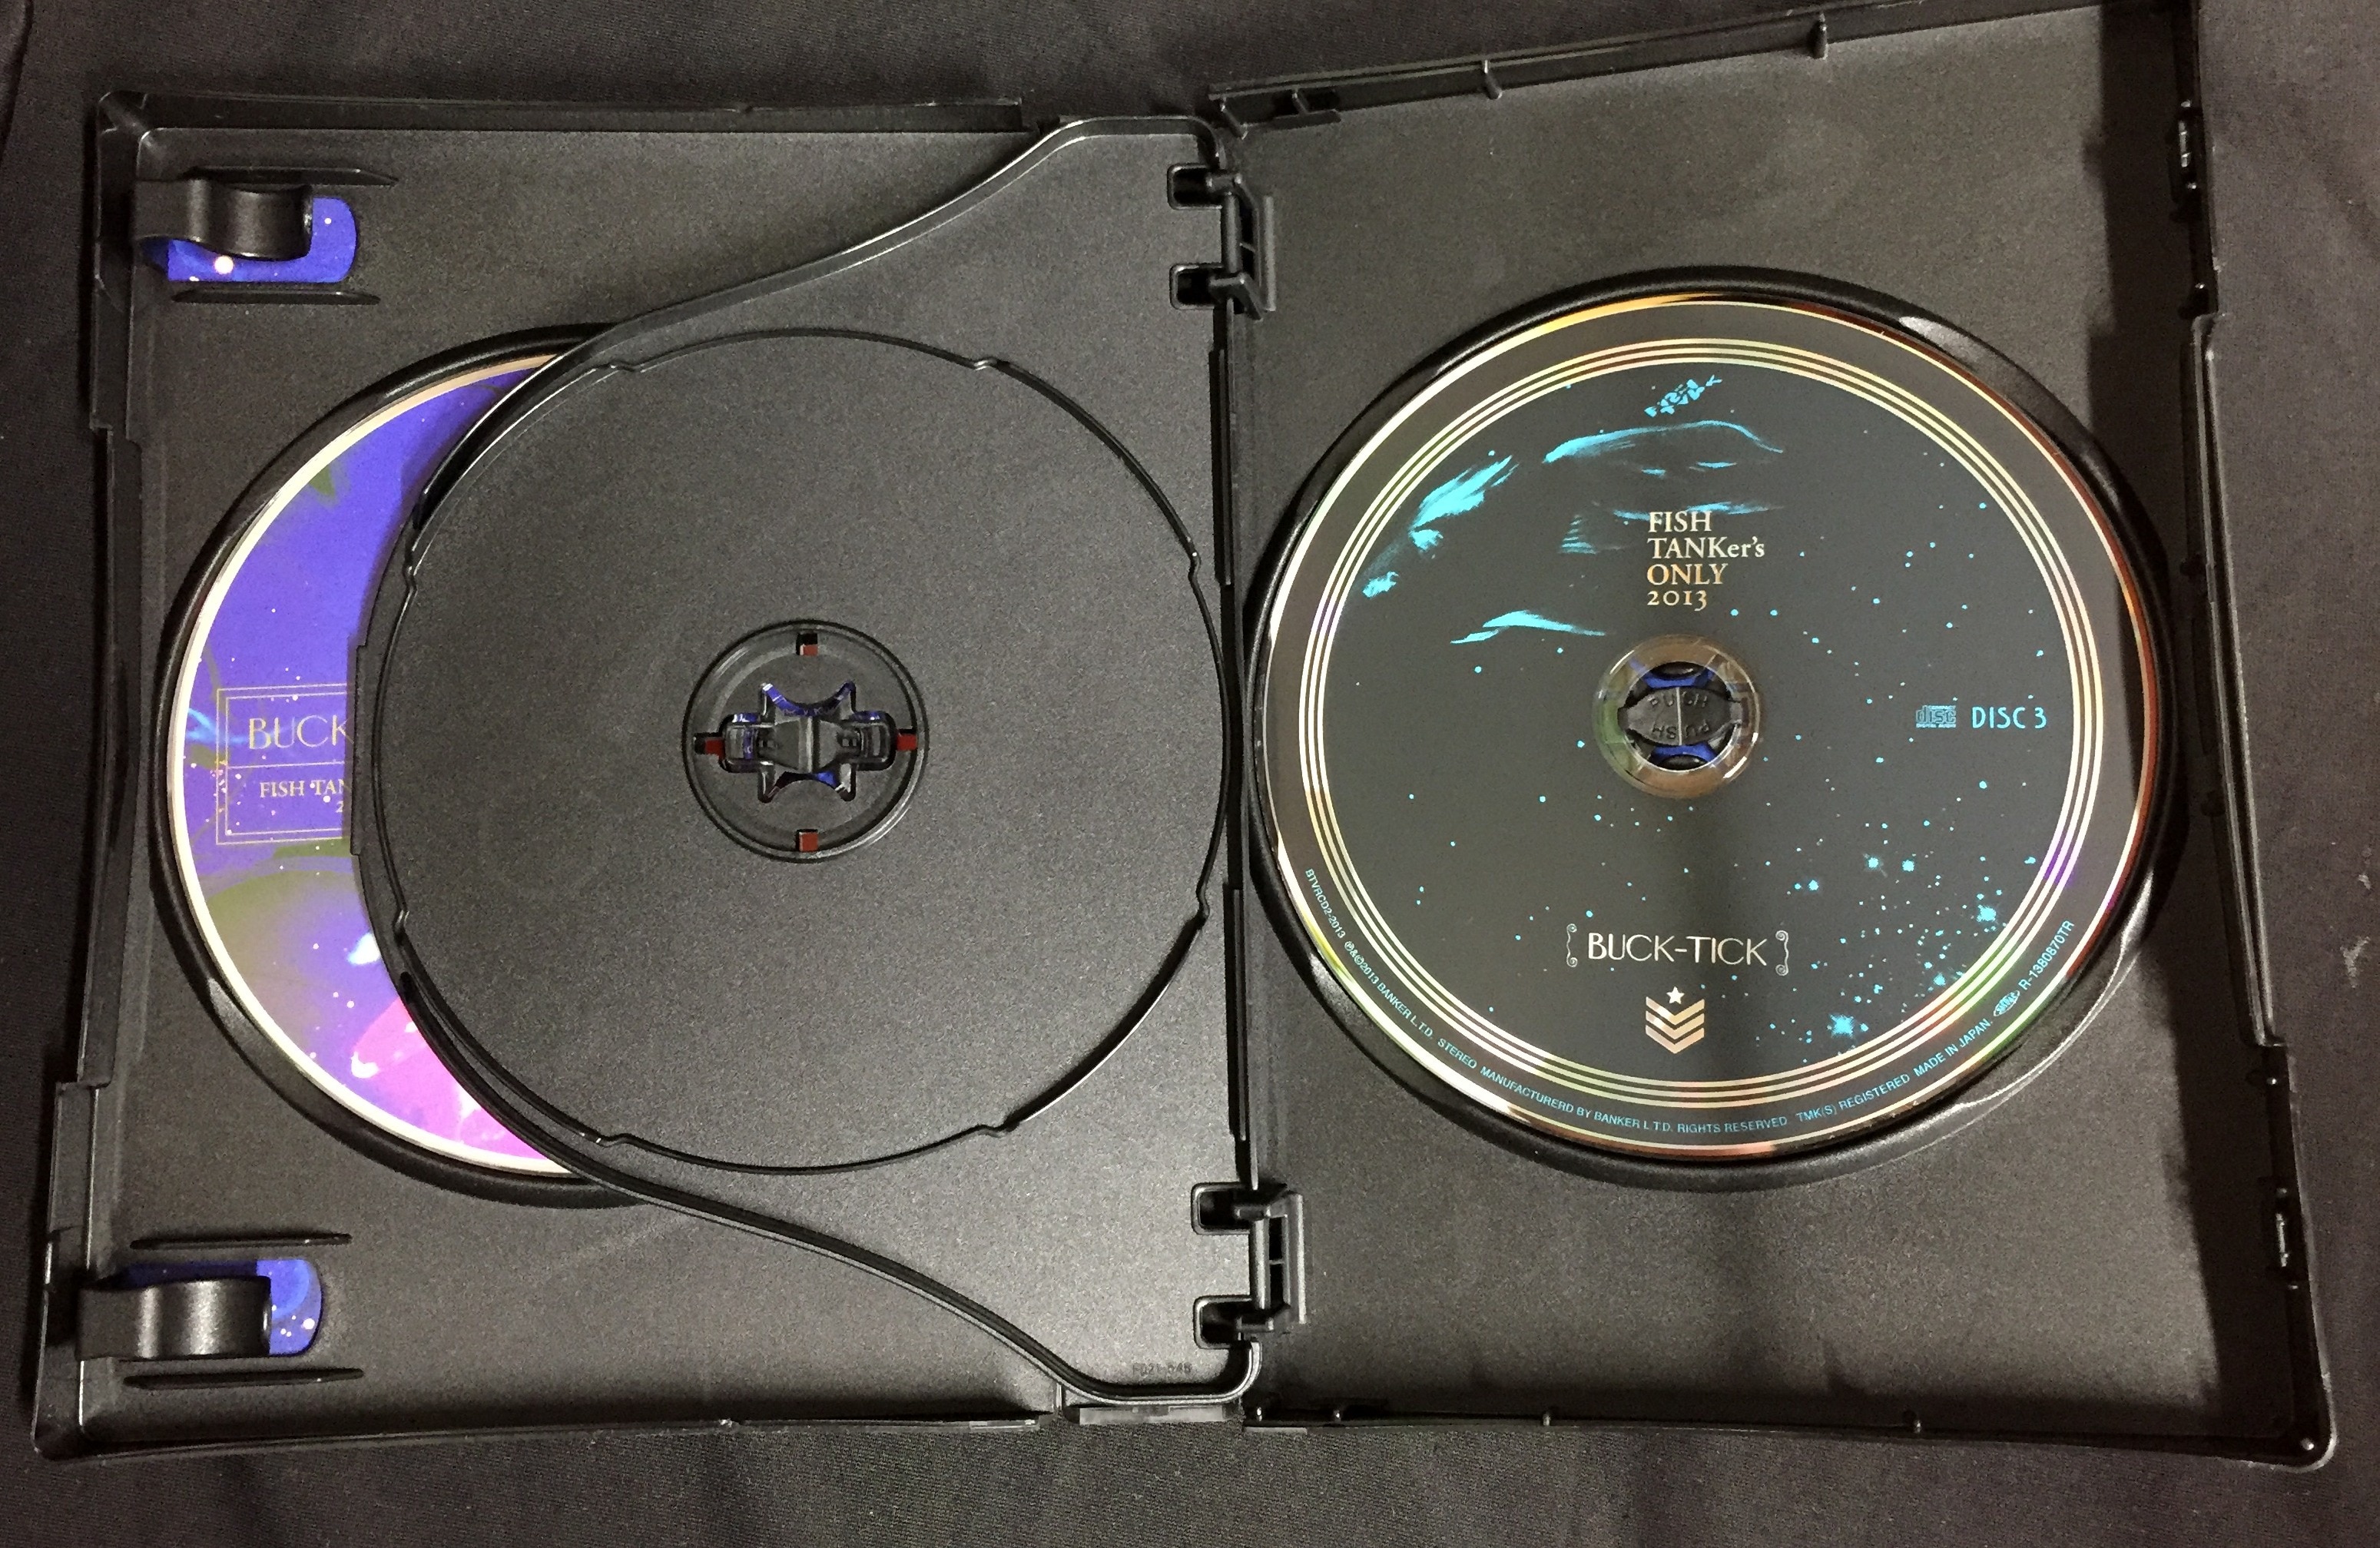 BUCK-TICK 完全予約限定盤(Blu-ray+2CD) FISH TANKer's ONLY 2013 